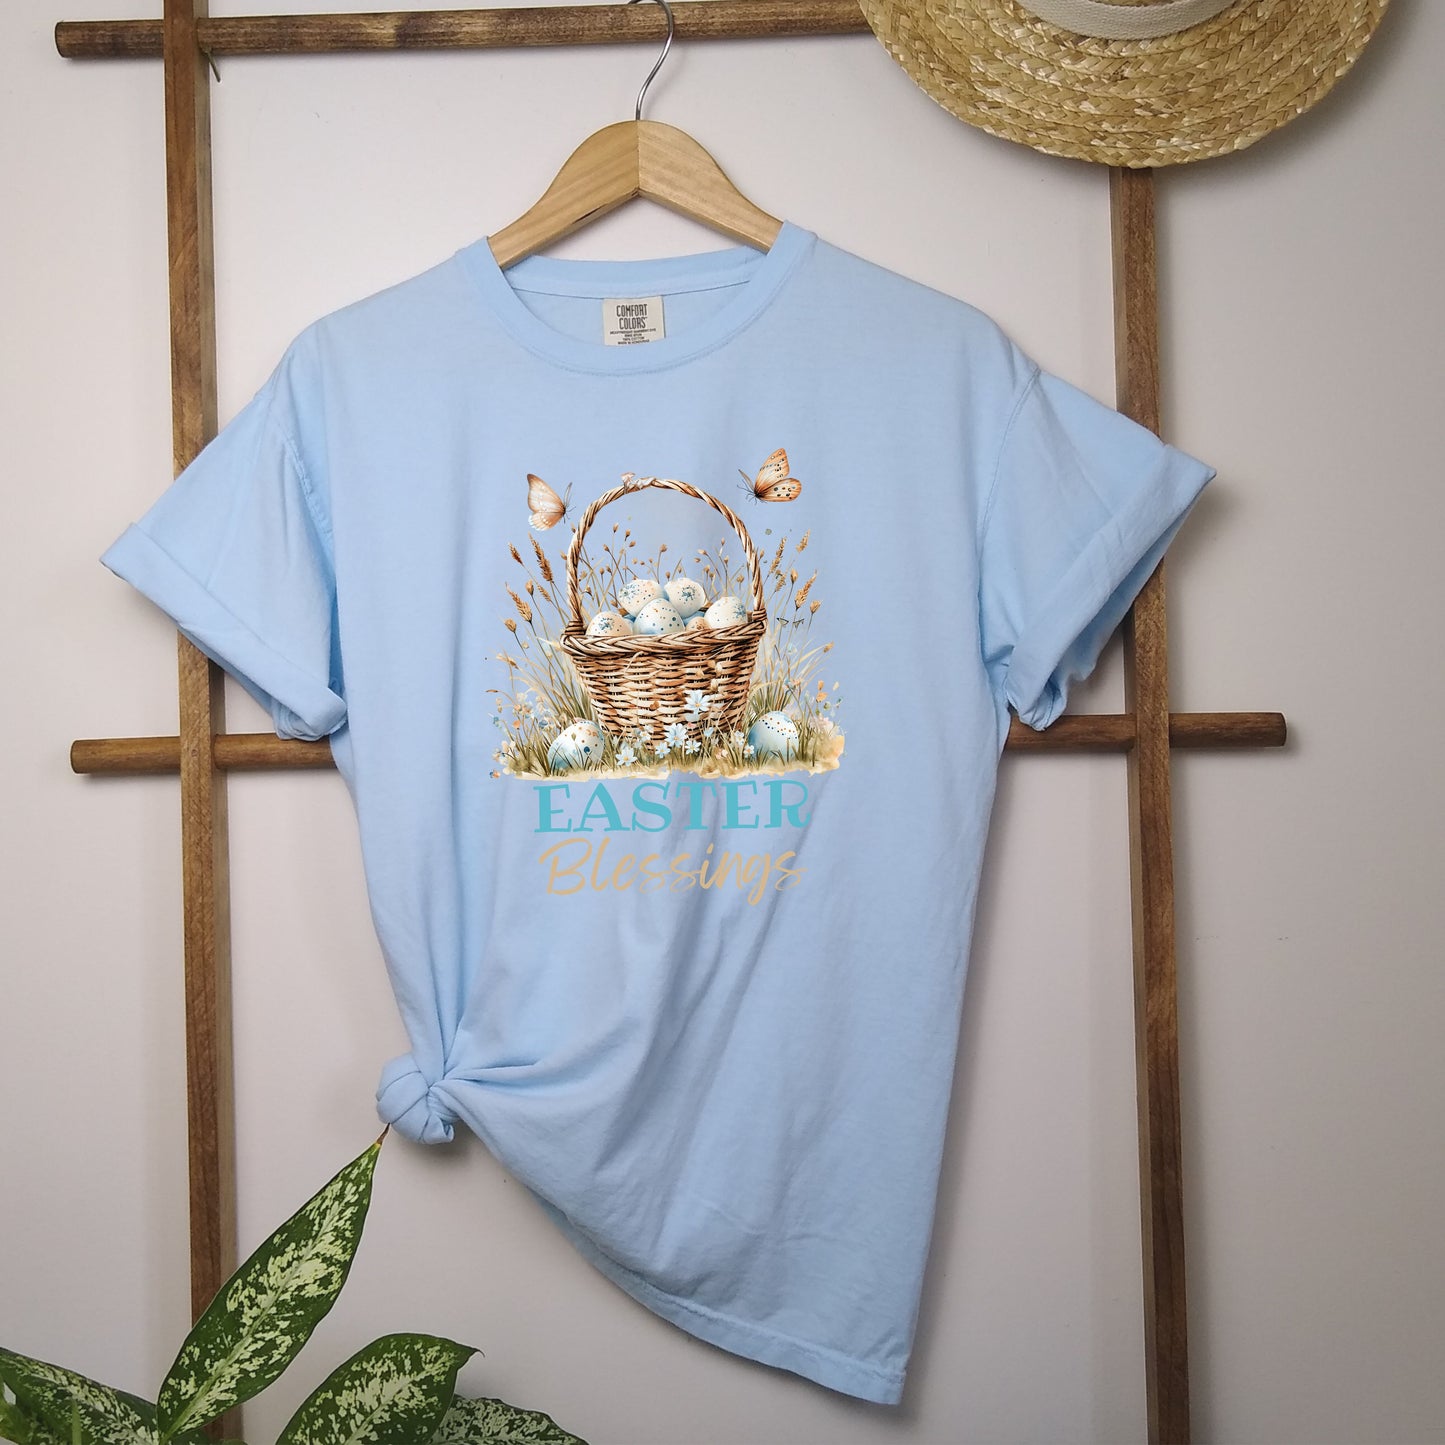 Easter Basket Blessings T-shirt, Easter Basket, Easter Blessings T-Shirt, Inspirational T-Shirt, Easter Shirt, Cute Easter T-Shirt